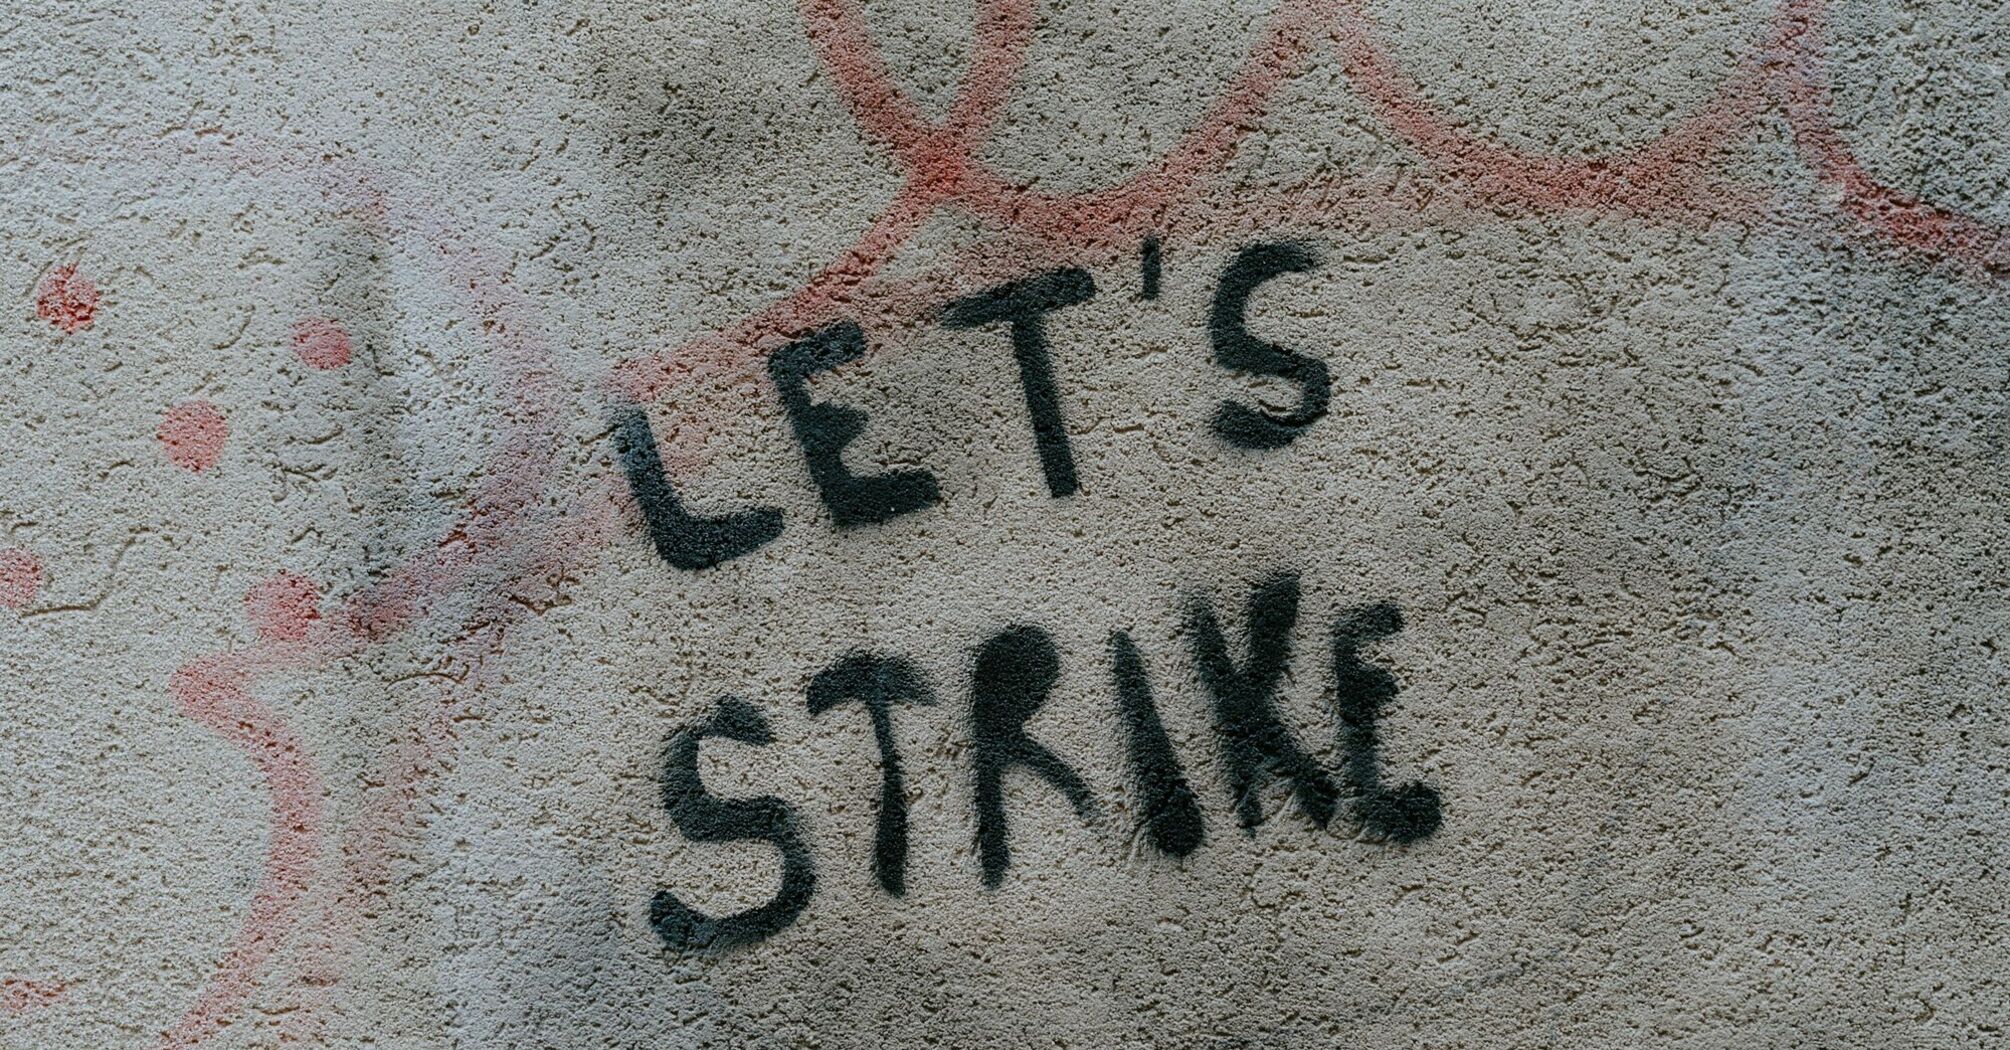 Graffiti saying 'Let's Strike' on a wall